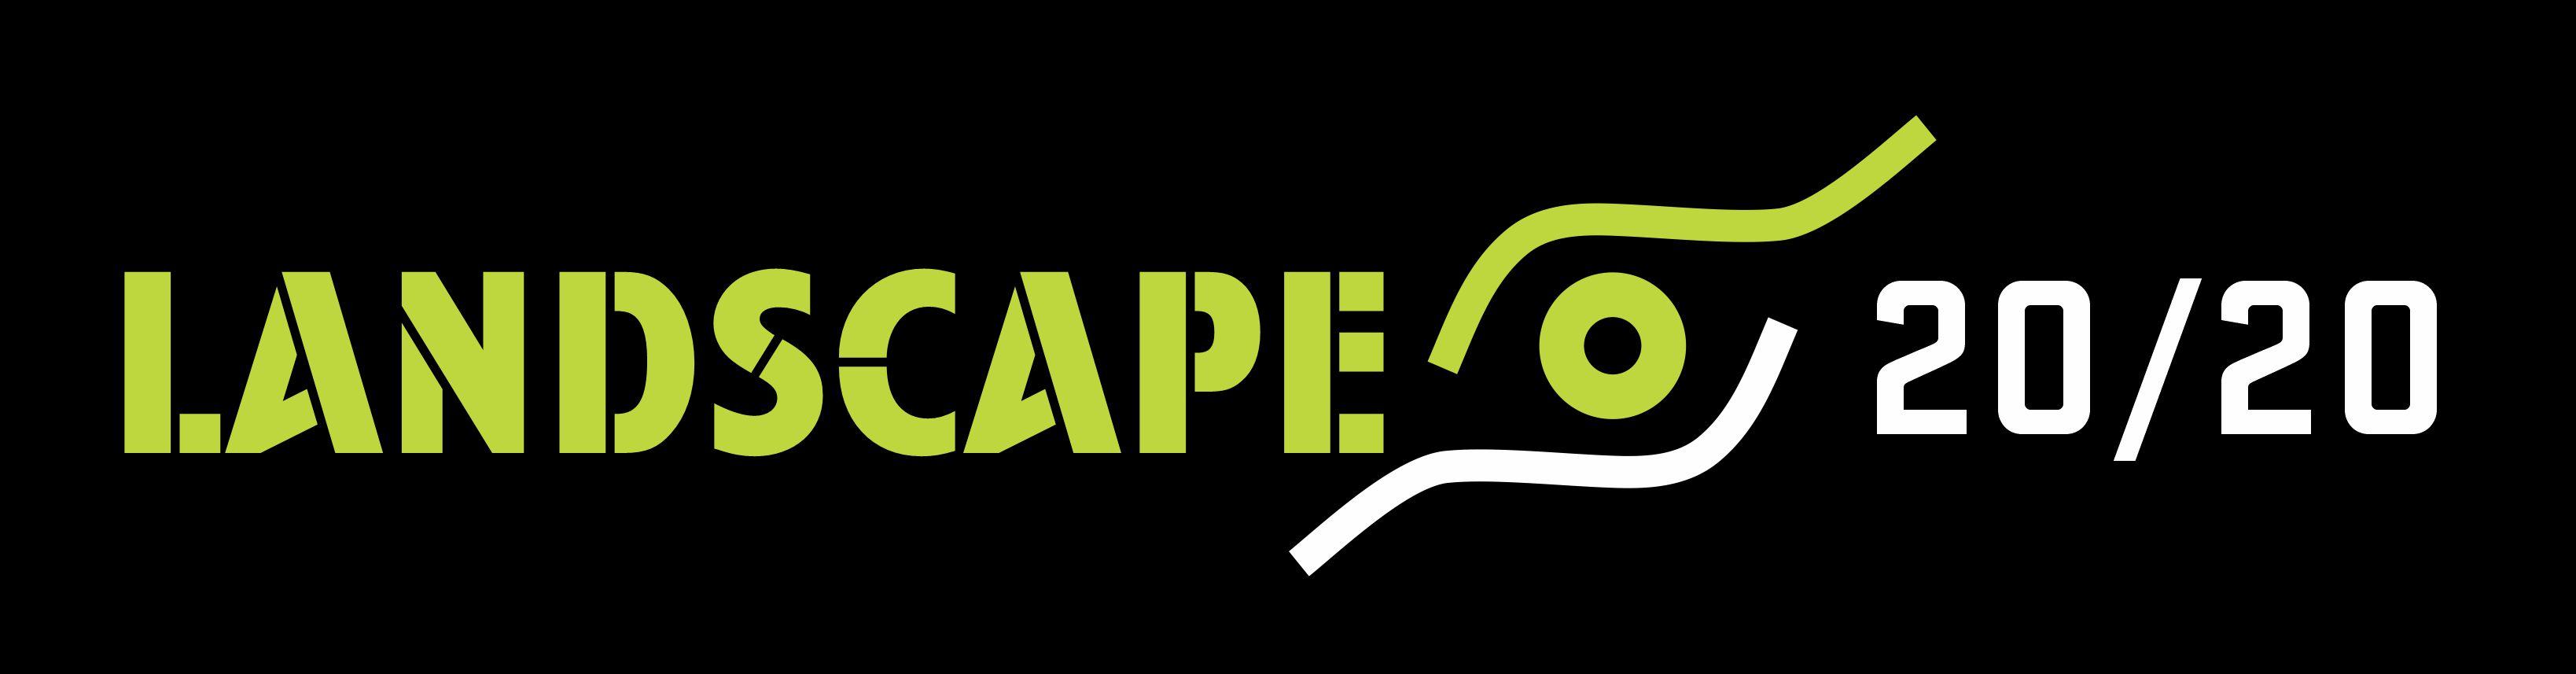 Landscape 20/20, LLC Logo